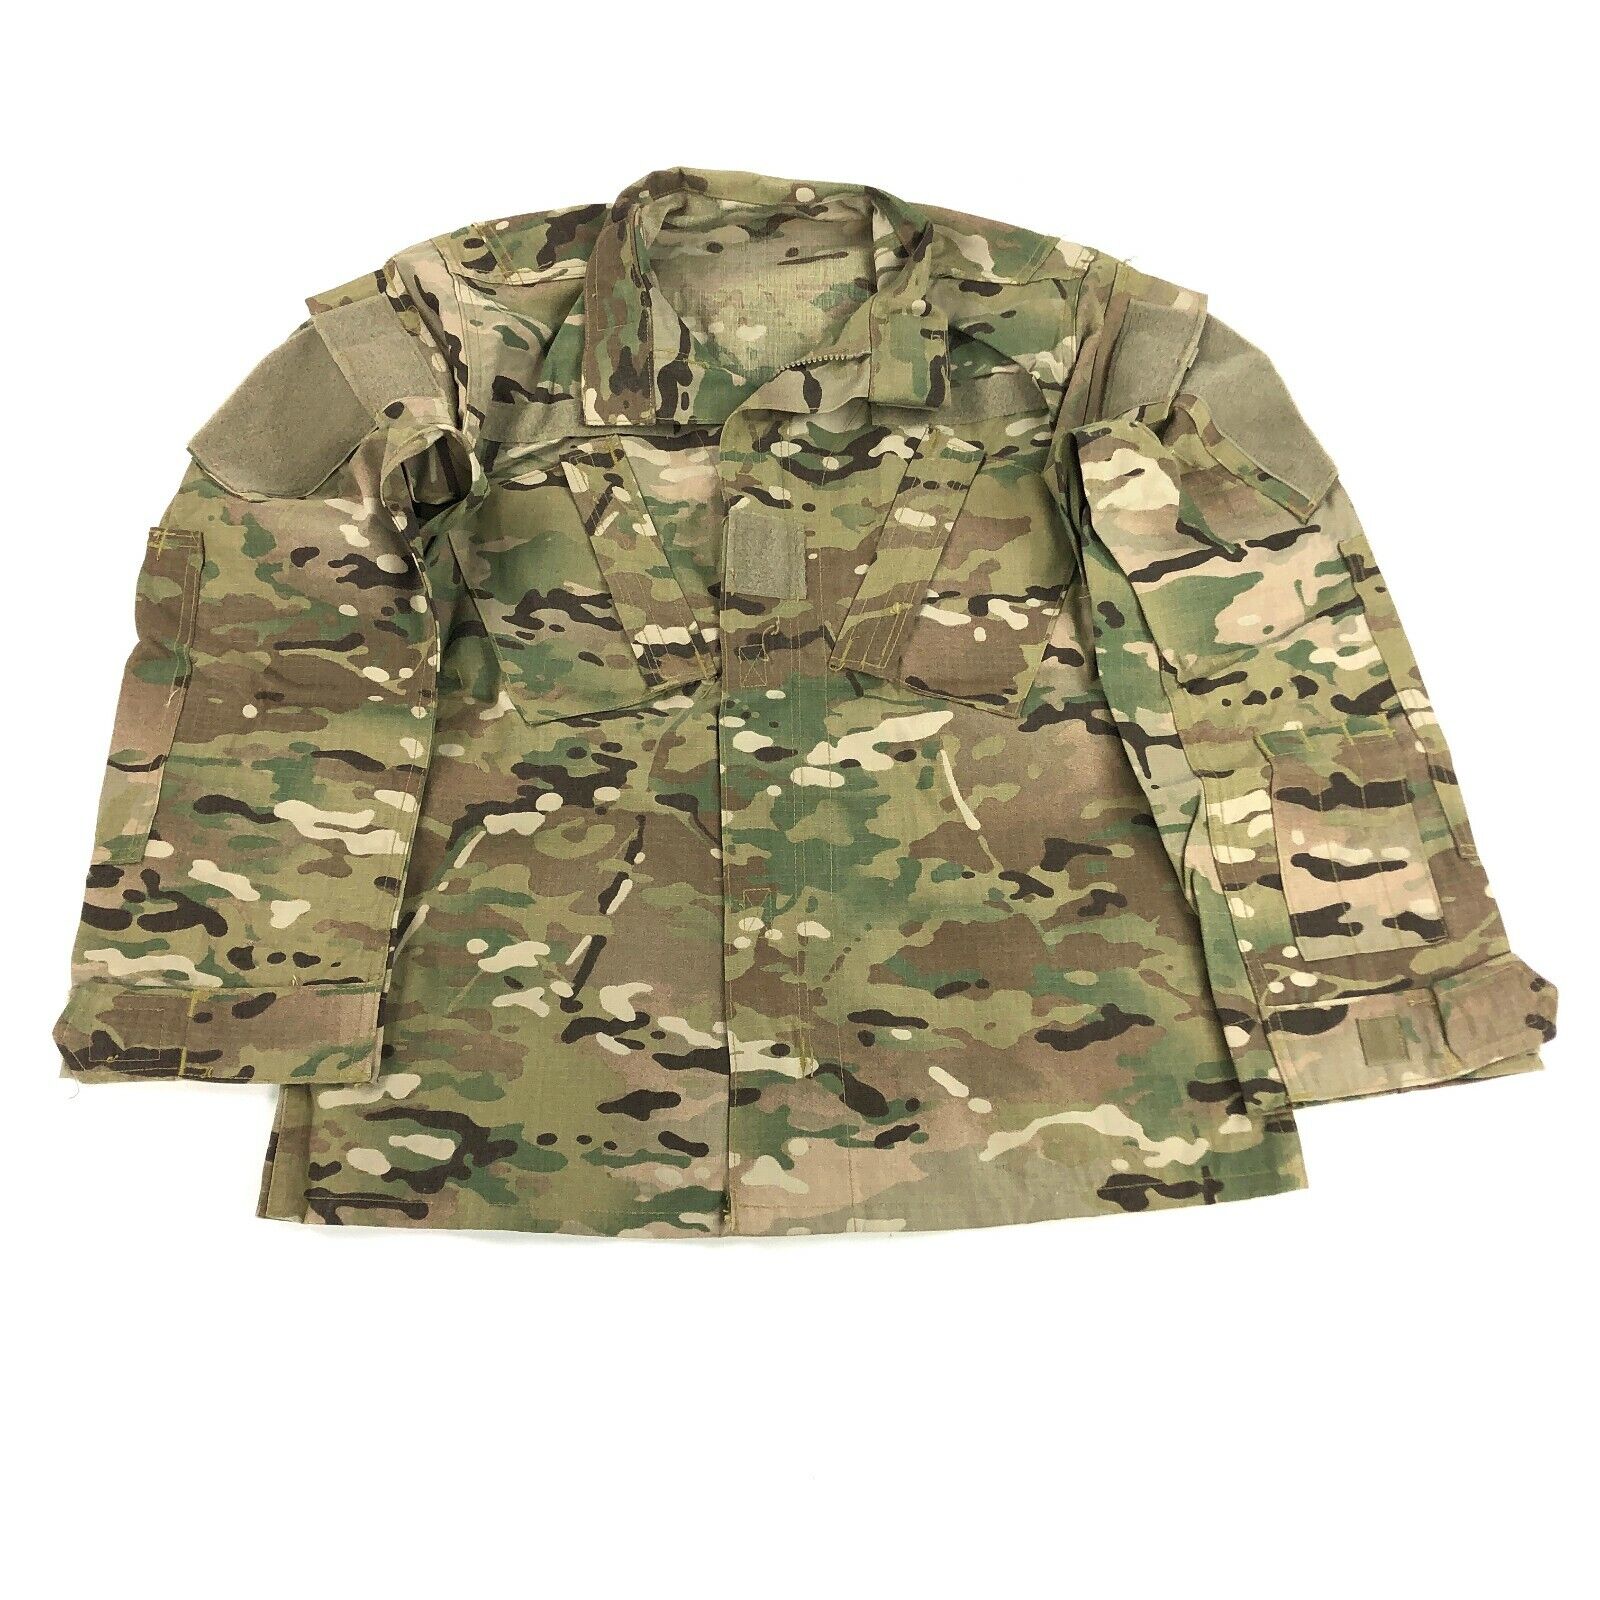 US Army Multicam Coat Fire Resistant Combat Camo Uniform Jacket Small Short